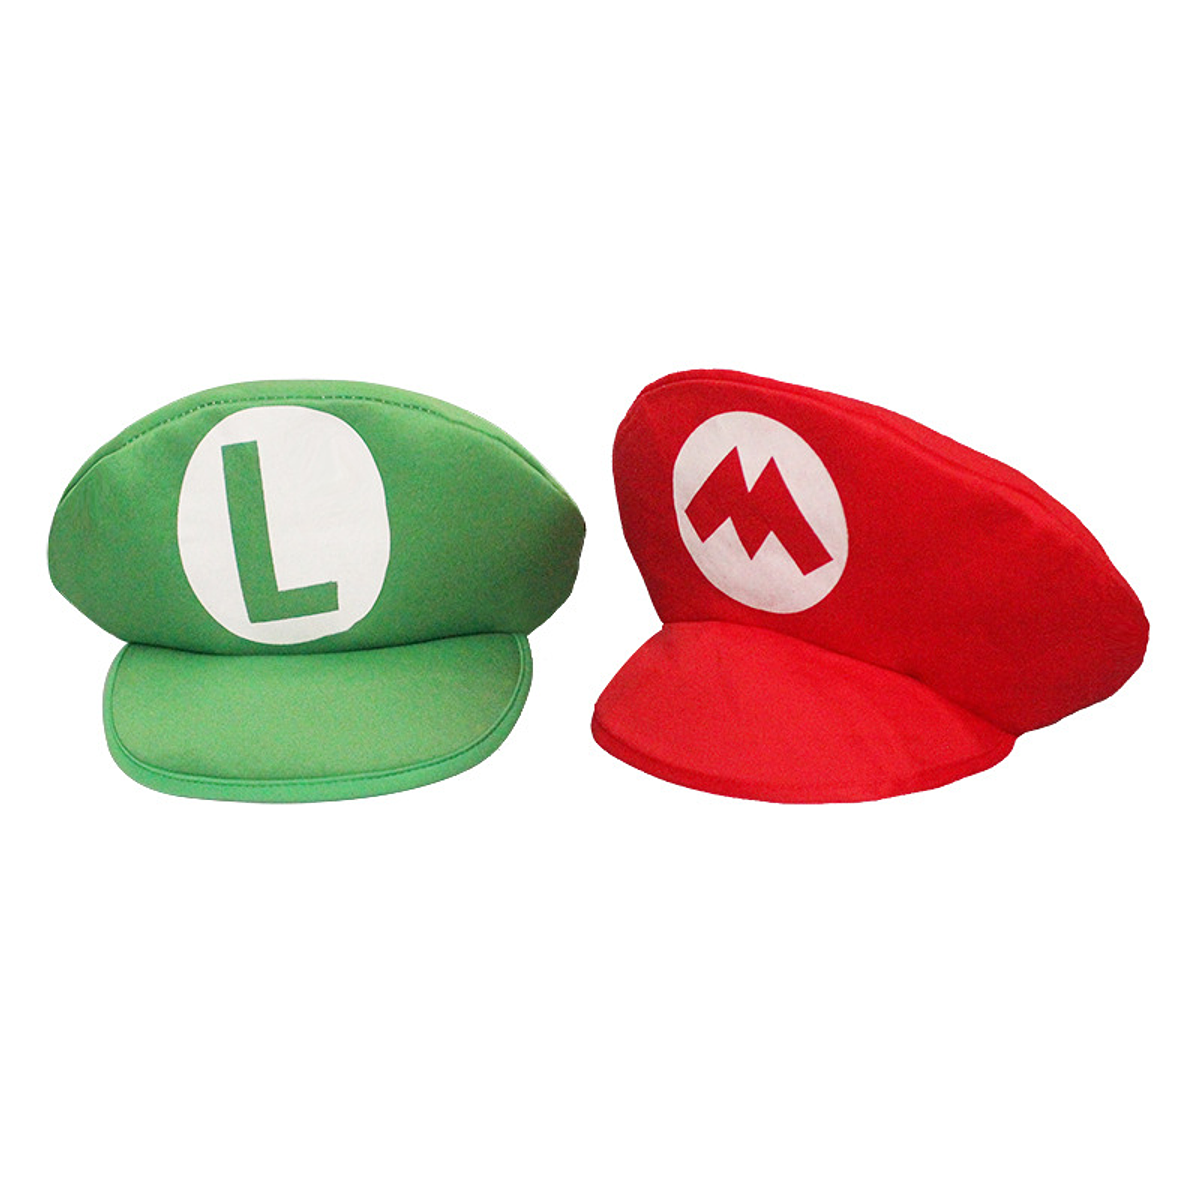 Gorro Super Mario Bros y de Luigi, Gorra Unisex